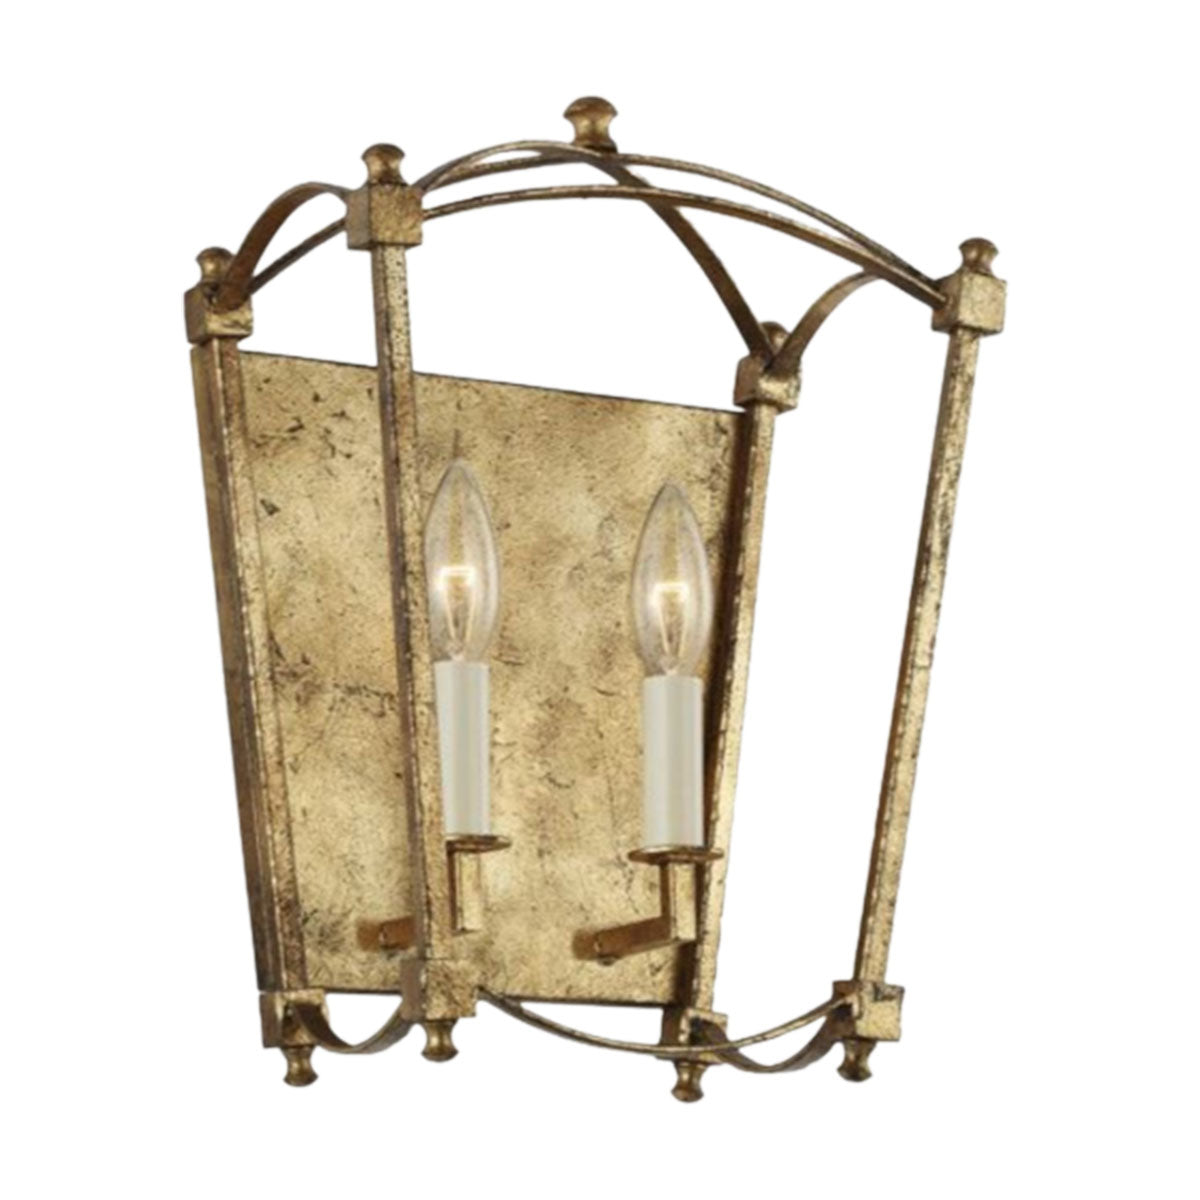 Antique Gold Wall Lantern - 2 lights